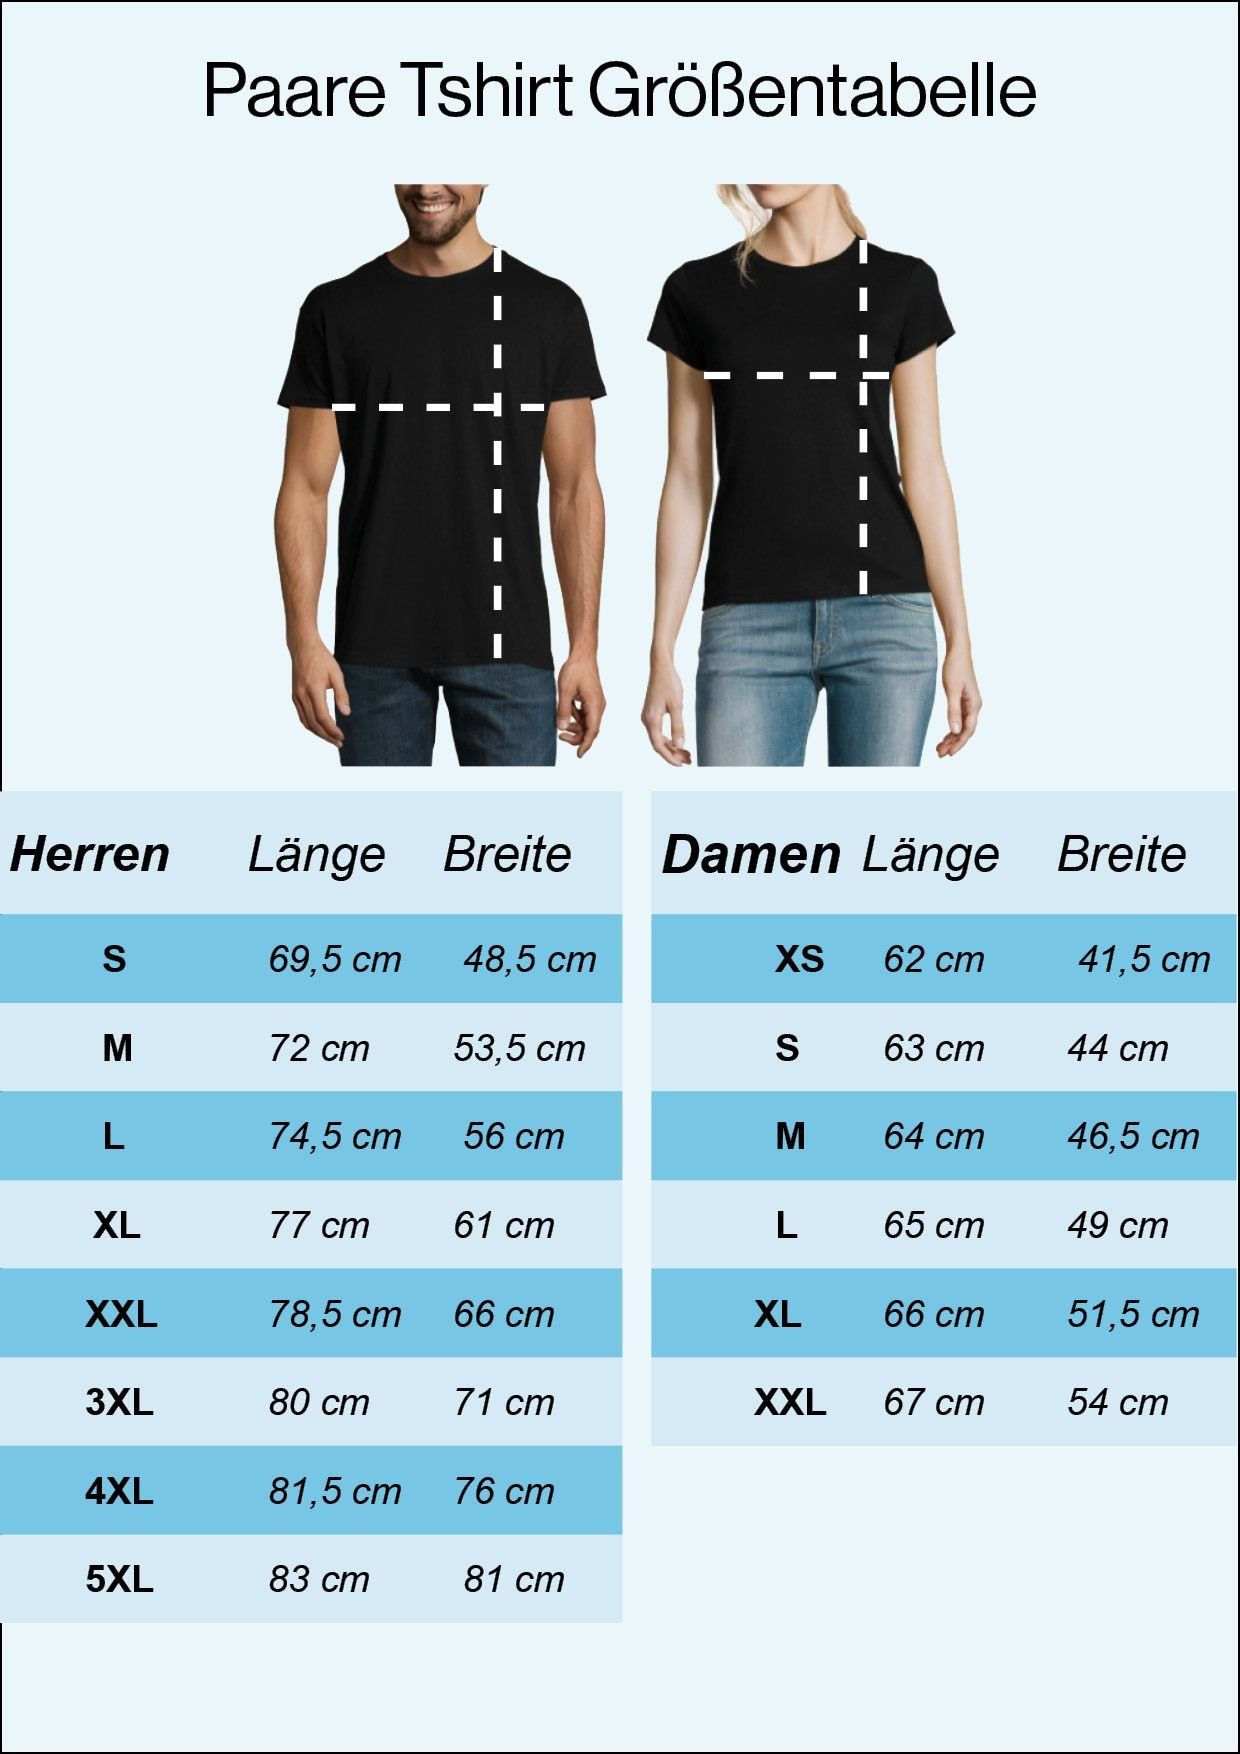 Paar QUEEN & Schwarz und Rückenprint King Couples Brust- Queen T-Shirt modischem mit T-Shirt / Shop